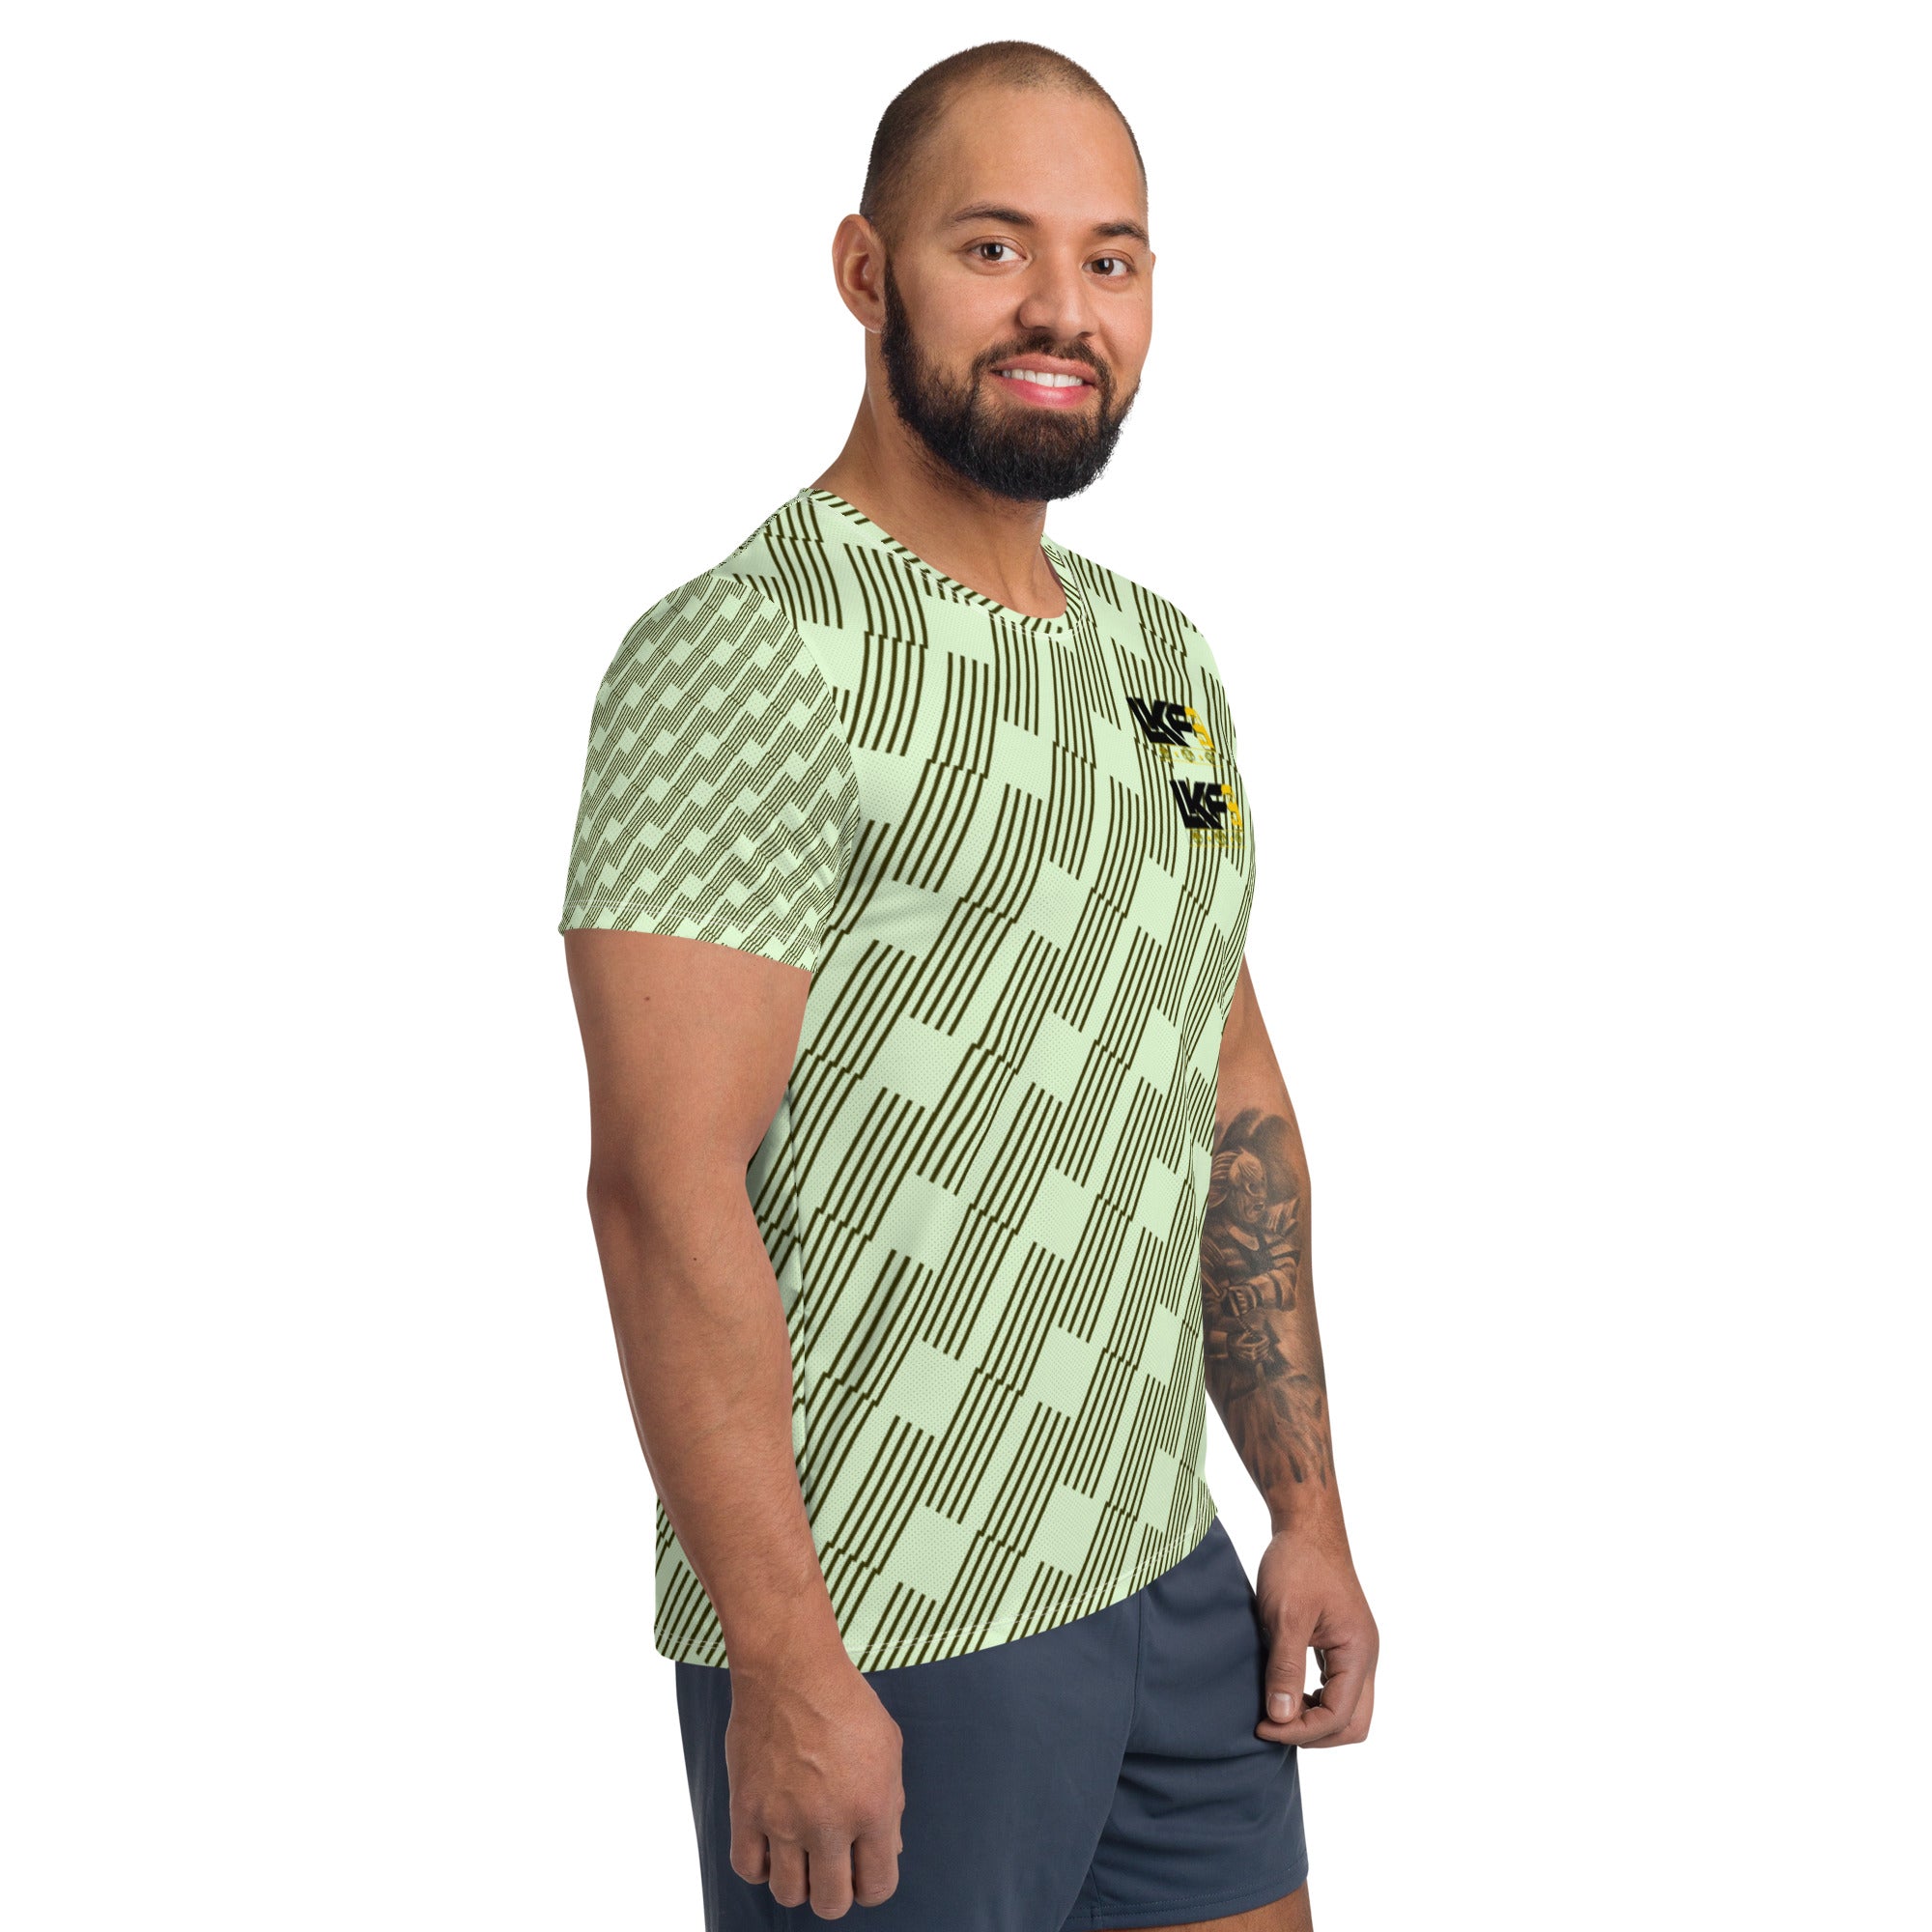 Athletic lkf9 T-shirt green